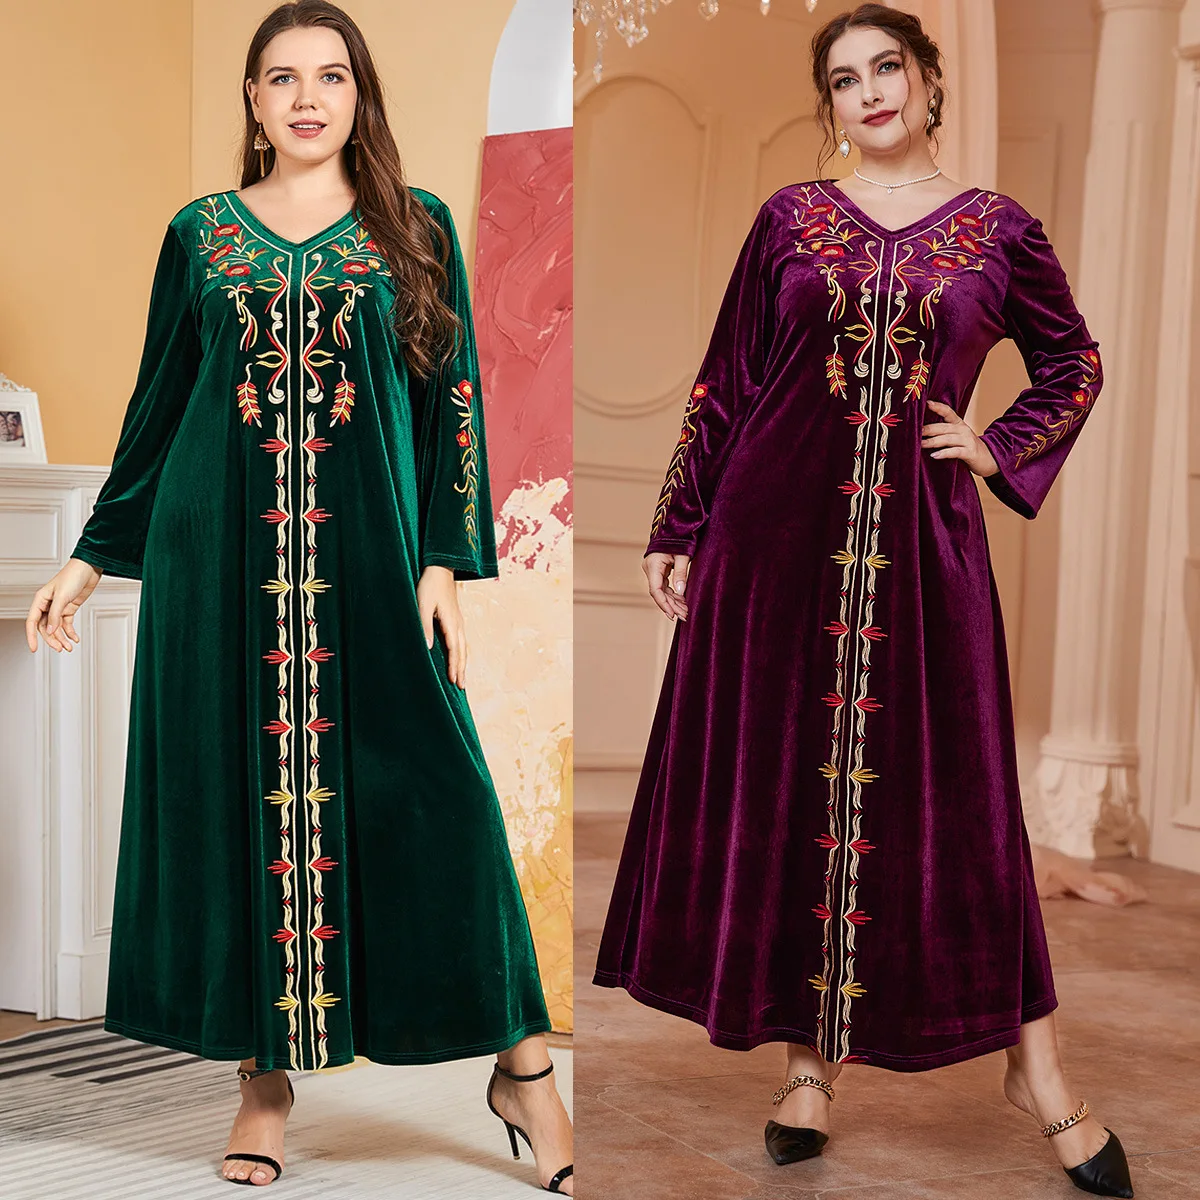 Spring Autumn Embroidery Velvet Dress Traditional Festival Indie Folk Dress V-neck Floral Women Dresses Pray Clothing Robe Arab